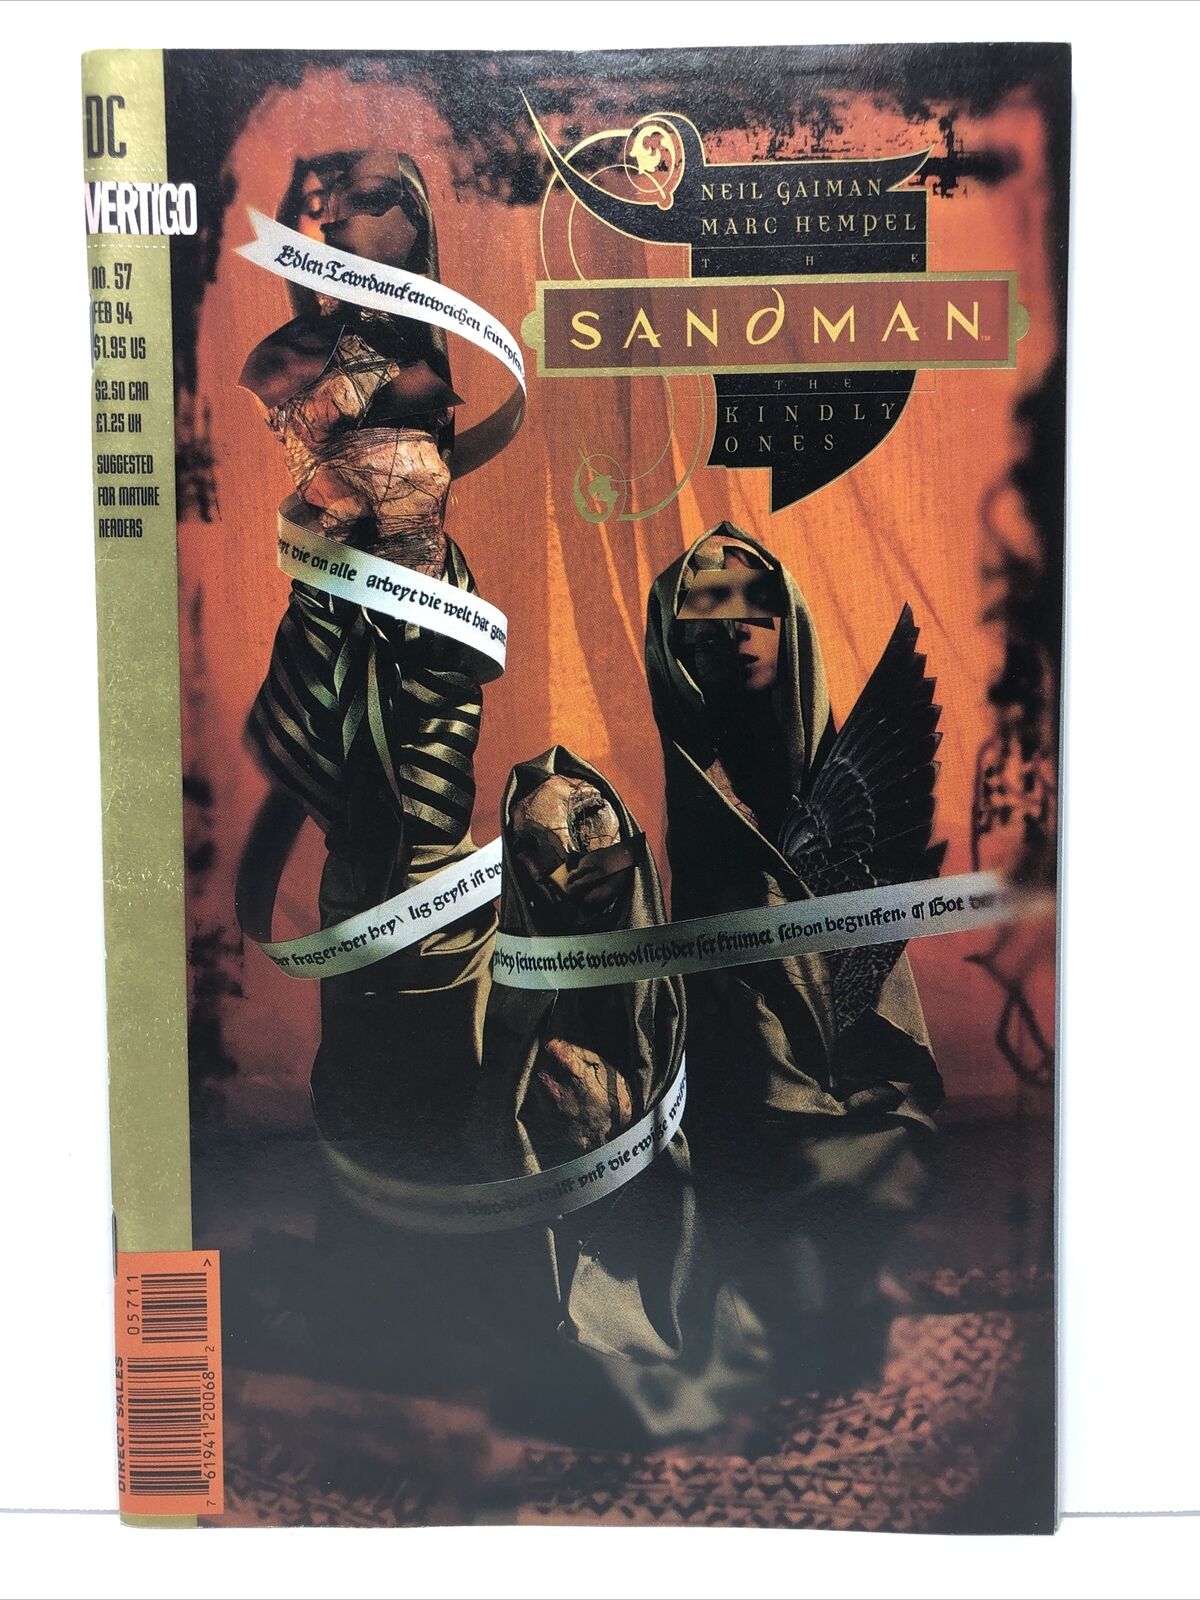 The Sandman issue #57 Vertigo DC comics Neil Gaiman Feb 1994